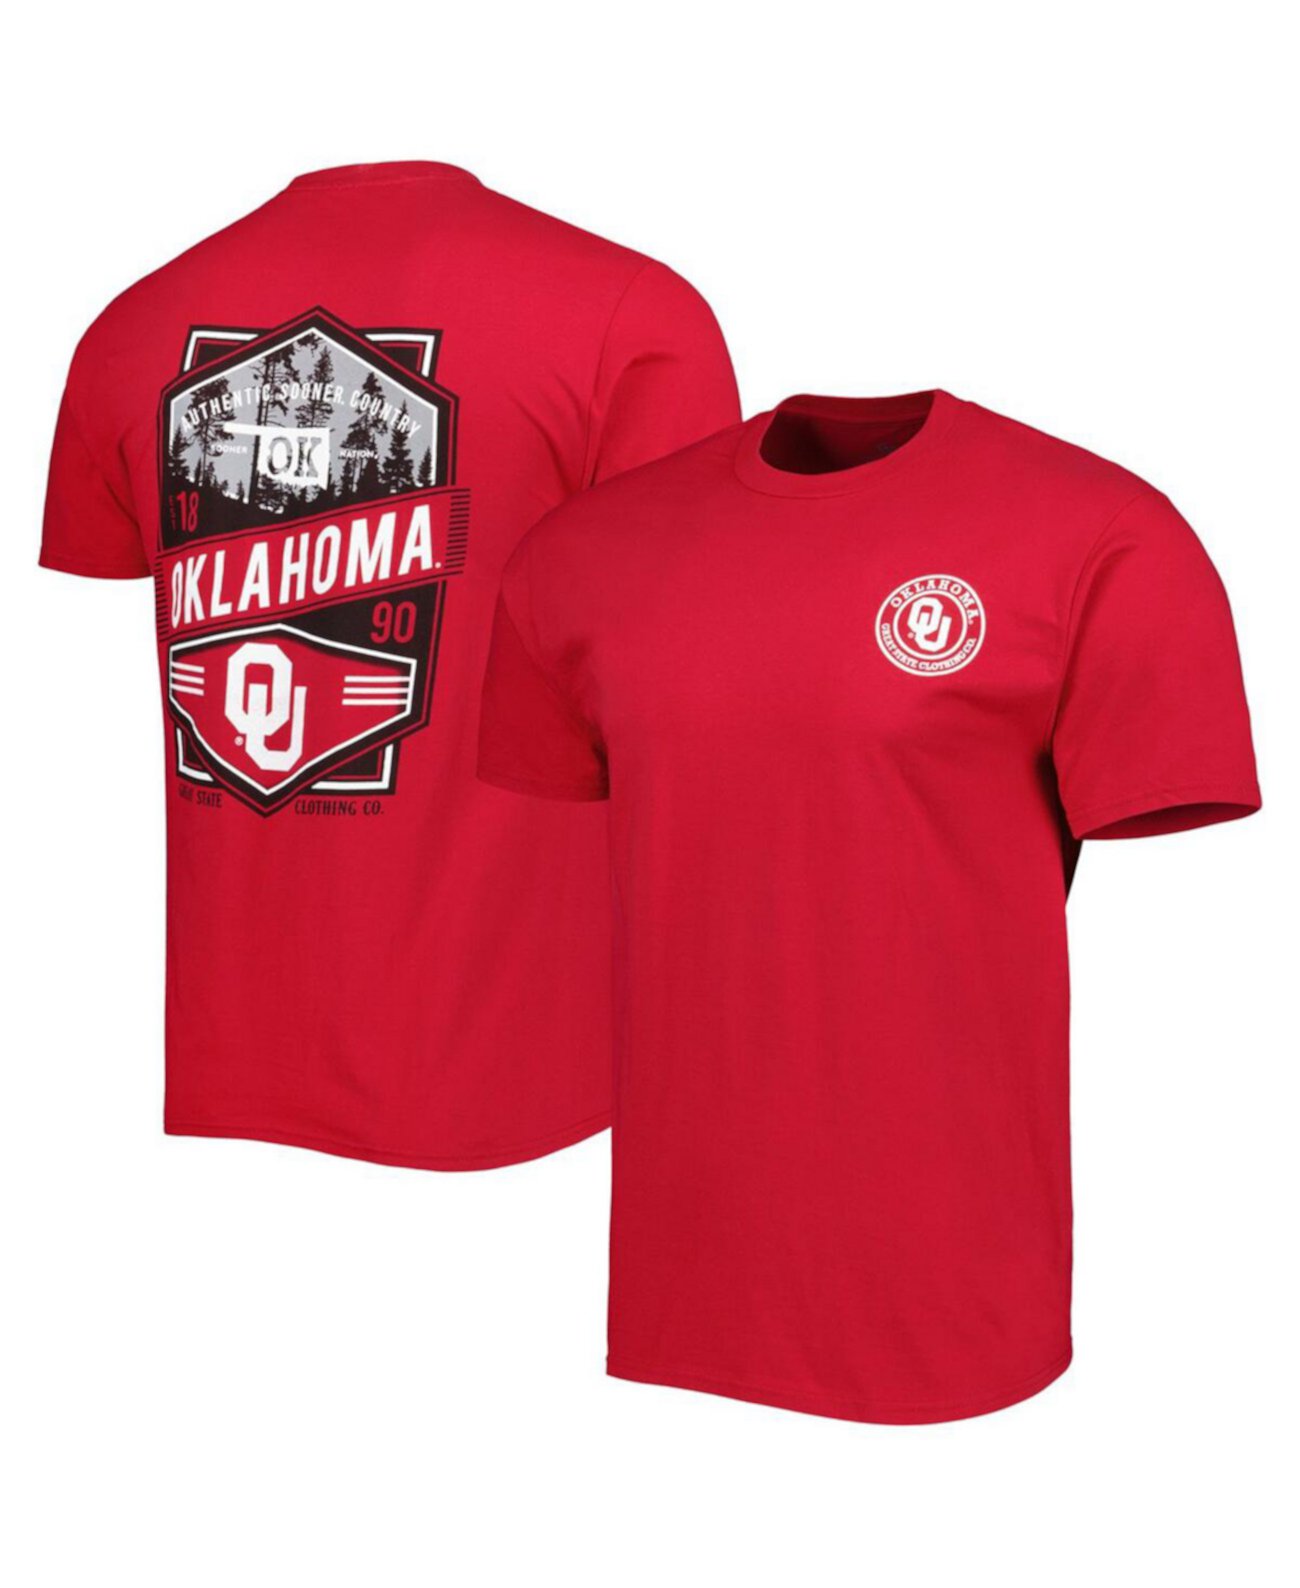 Мужская футболка Crimson Oklahoma Sooners с двойным бриллиантовым гербом Great State Clothing